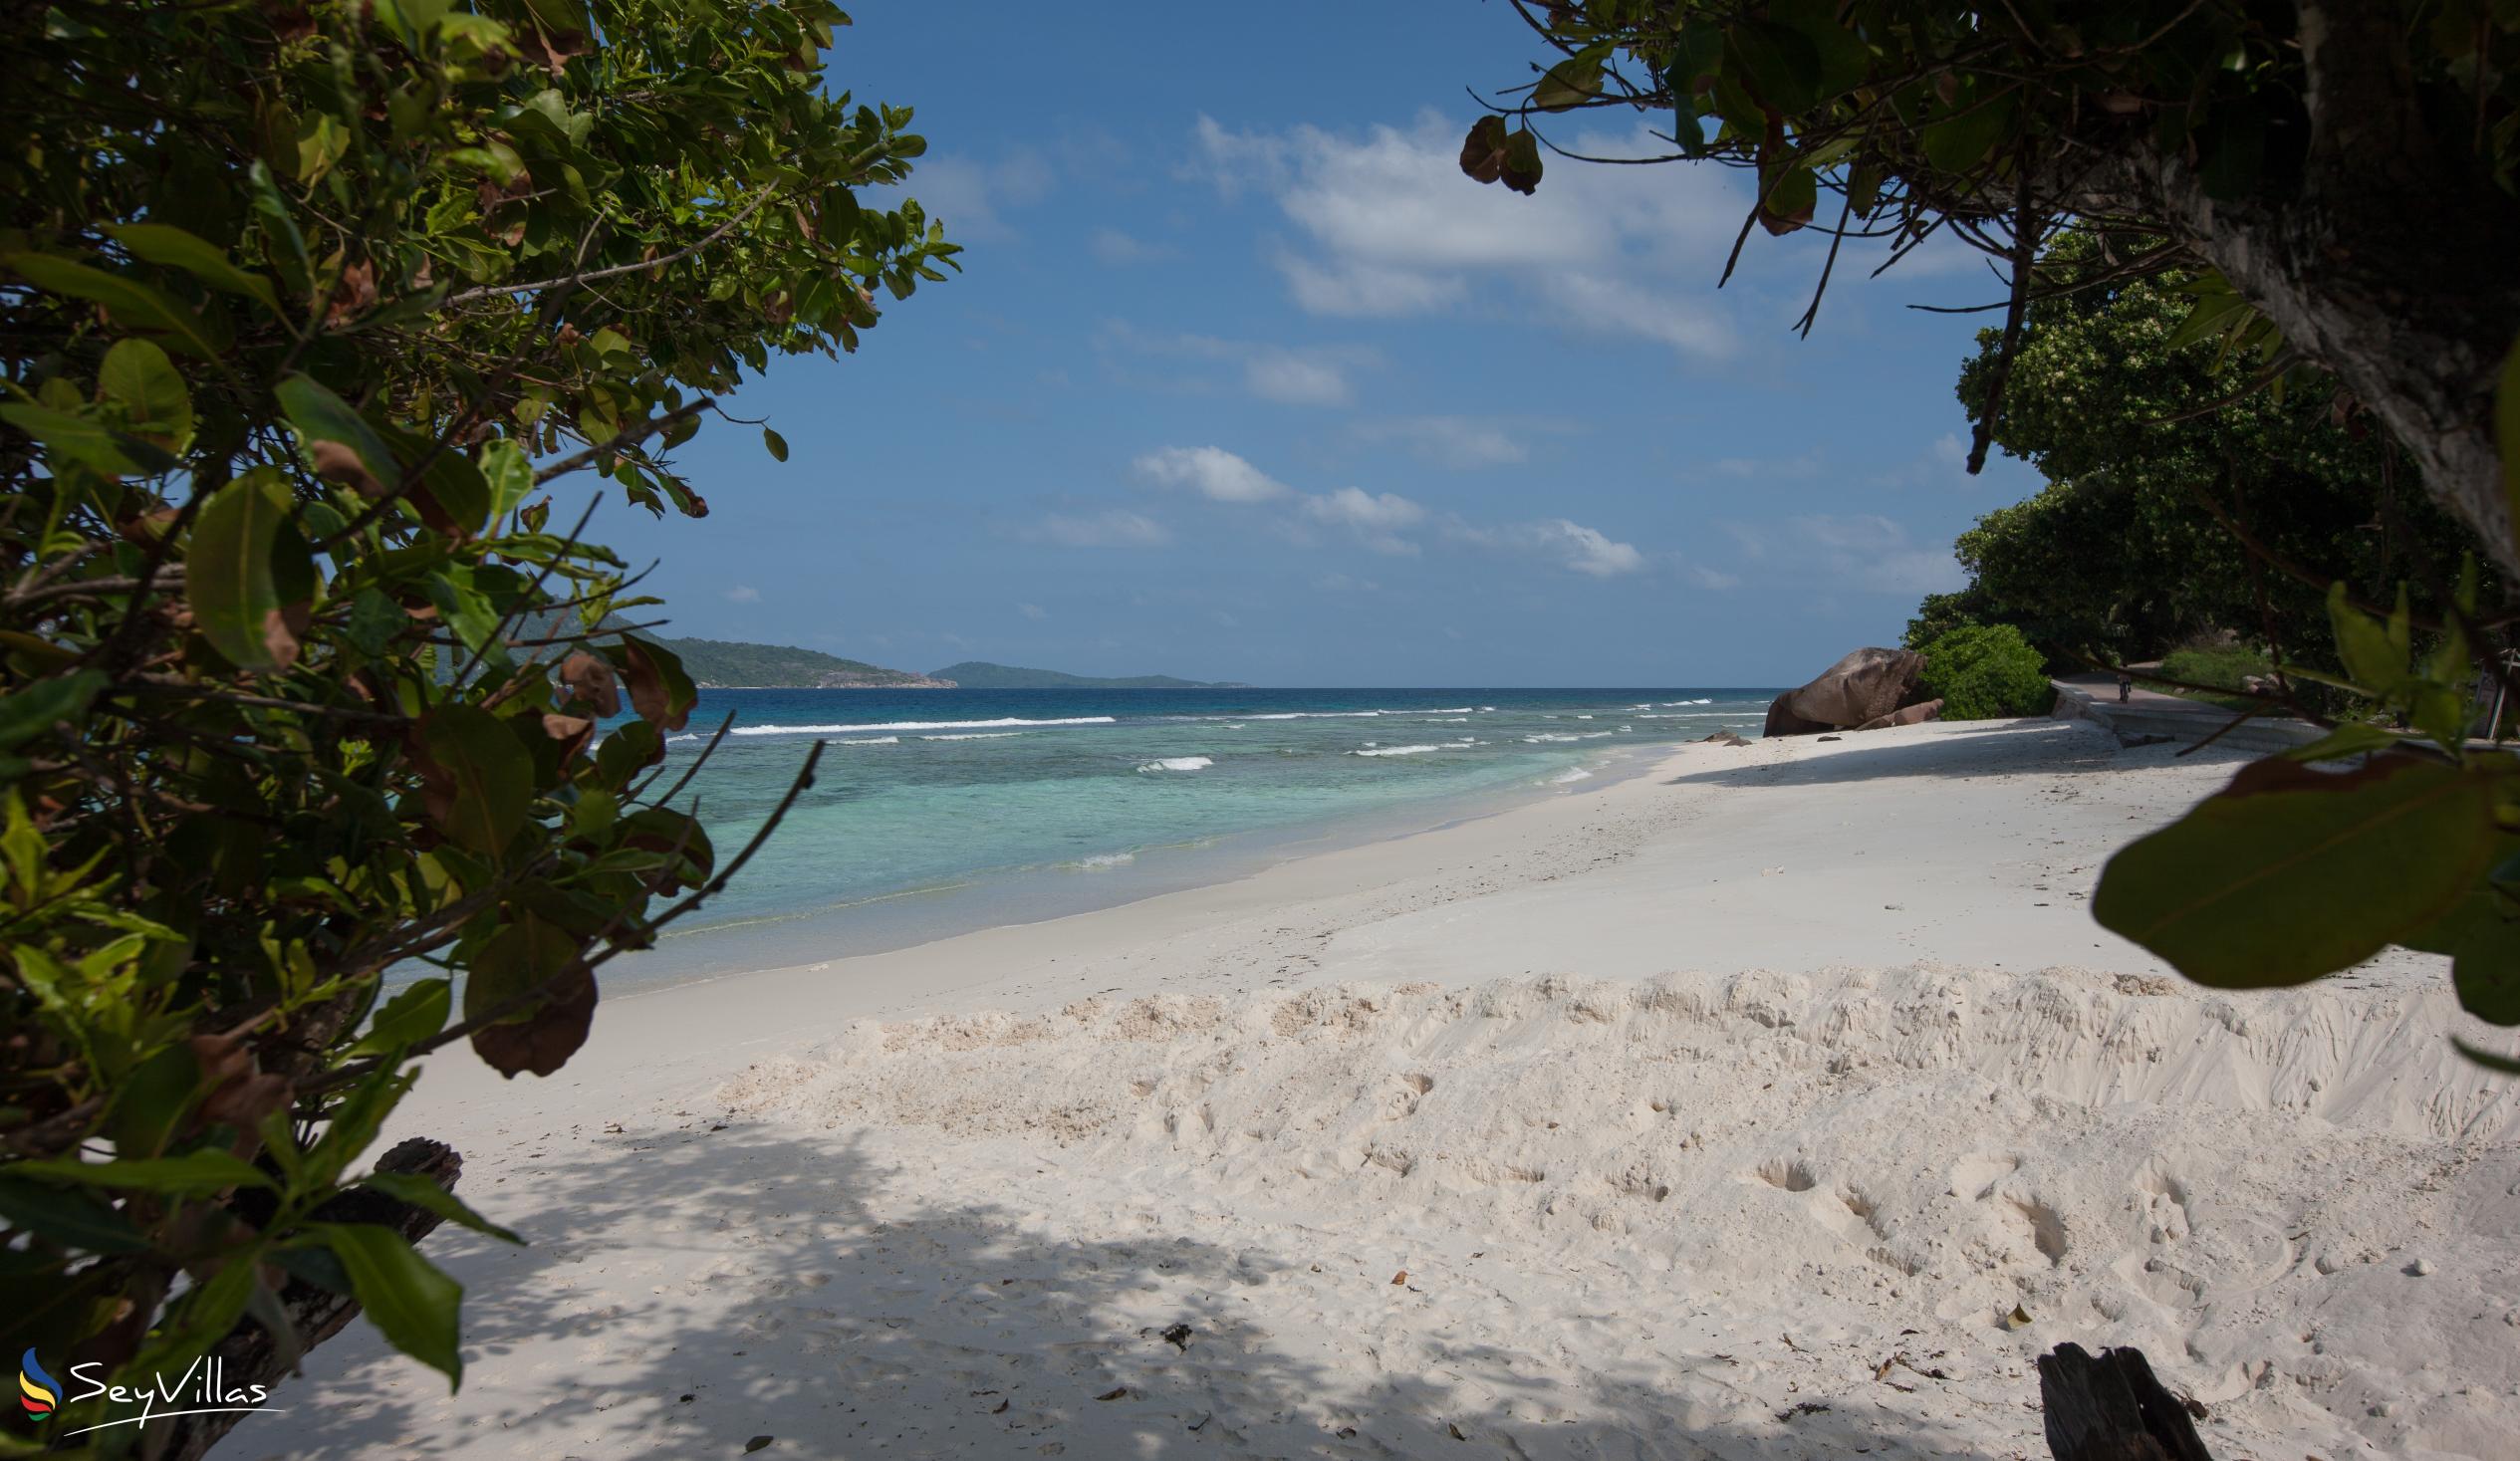 Foto 38: Le Relax Luxury Lodge - Posizione - La Digue (Seychelles)